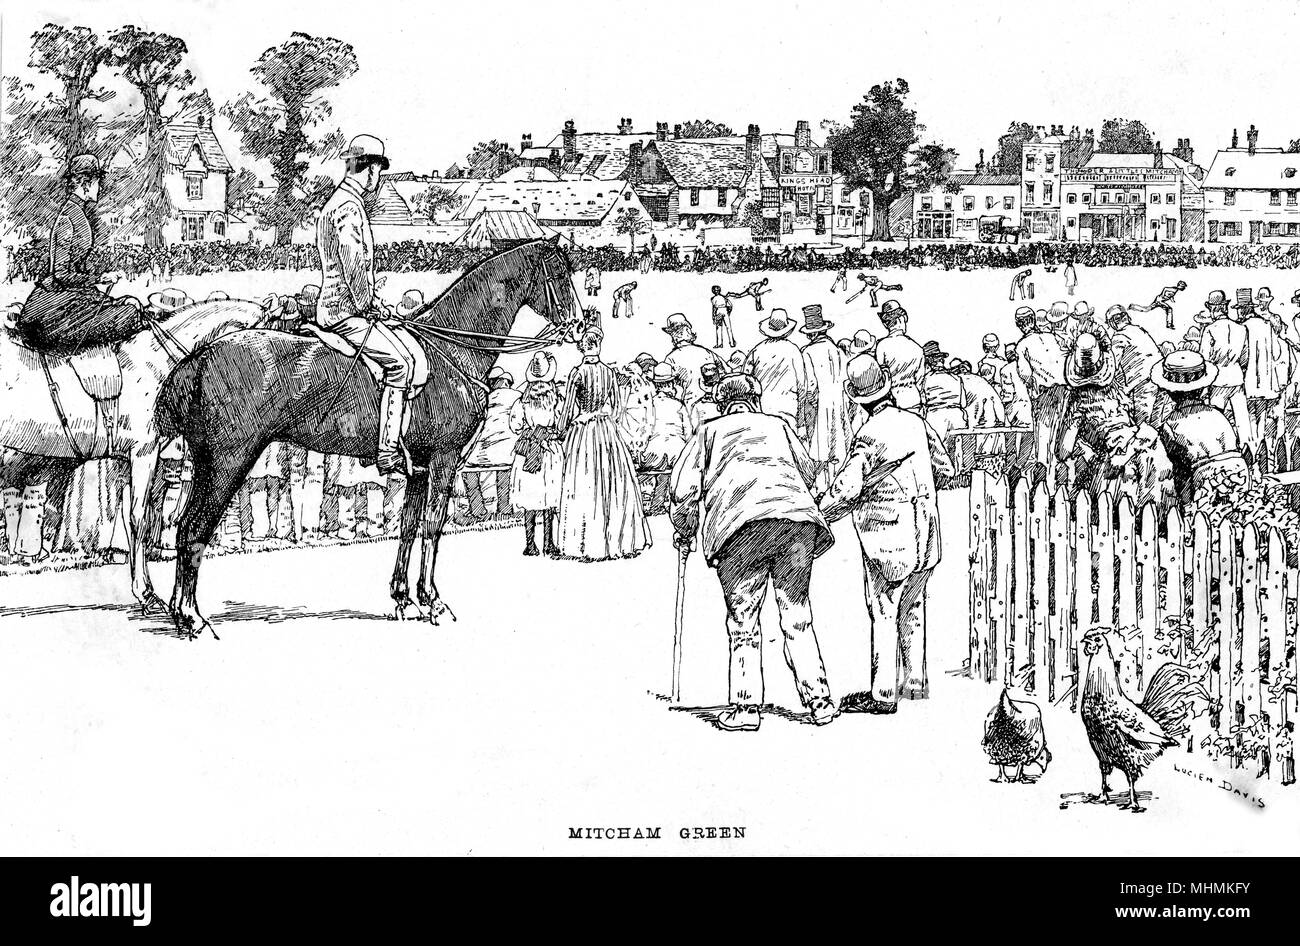 A village cricket match on Mitcham Green.       Date: 1888 Stock Photo